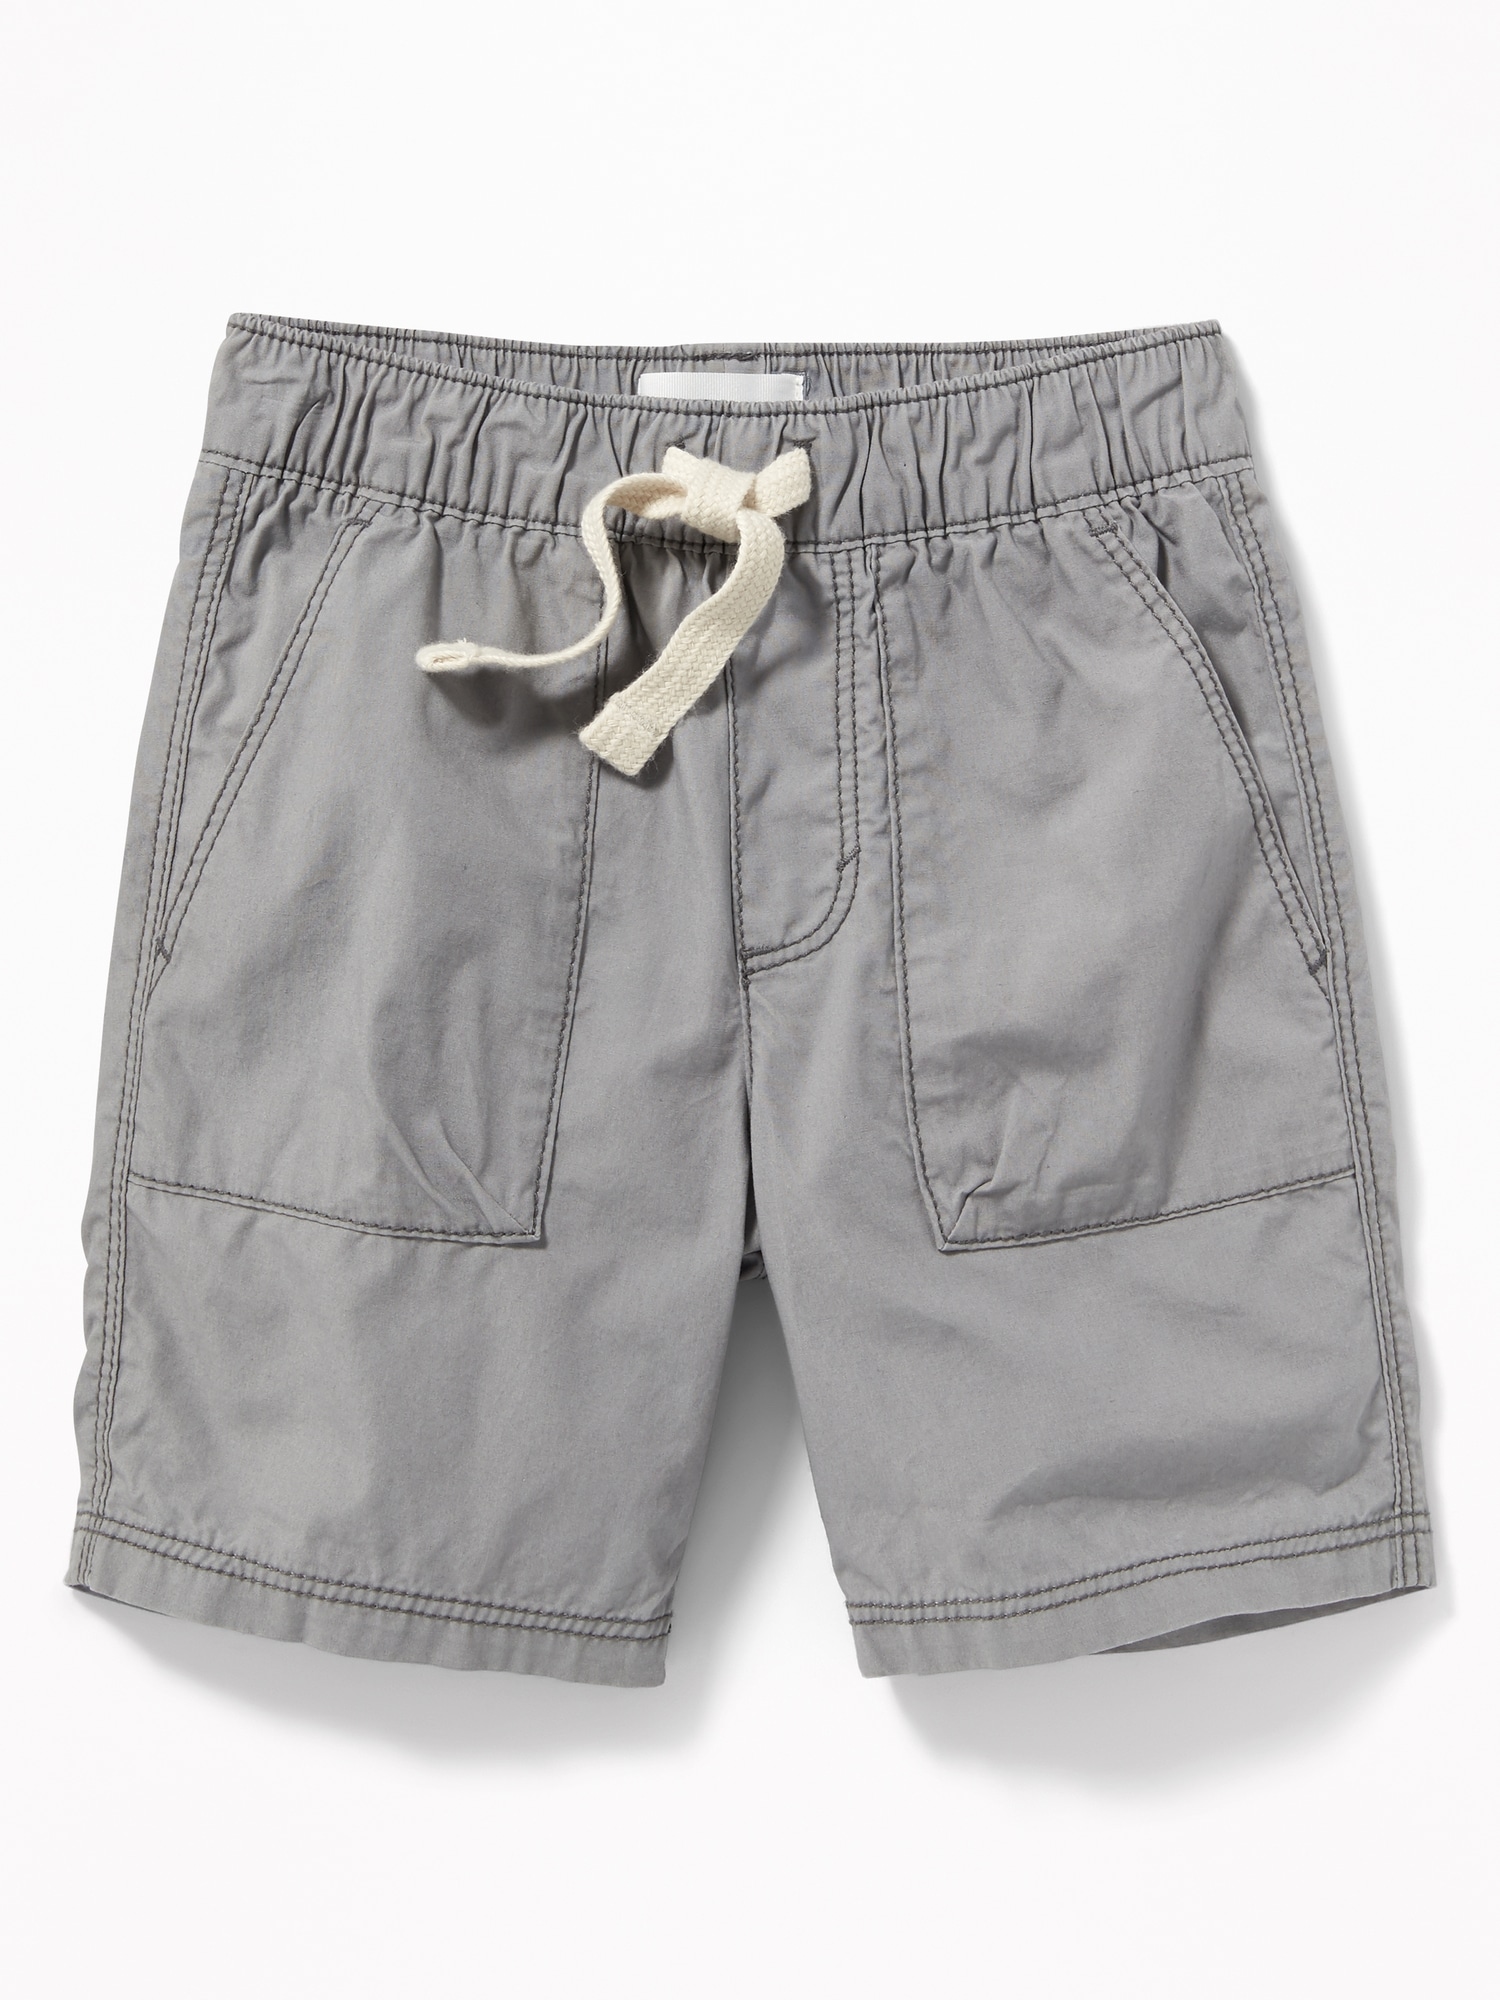 Pull-On Poplin Shorts for Toddler Boys | Old Navy